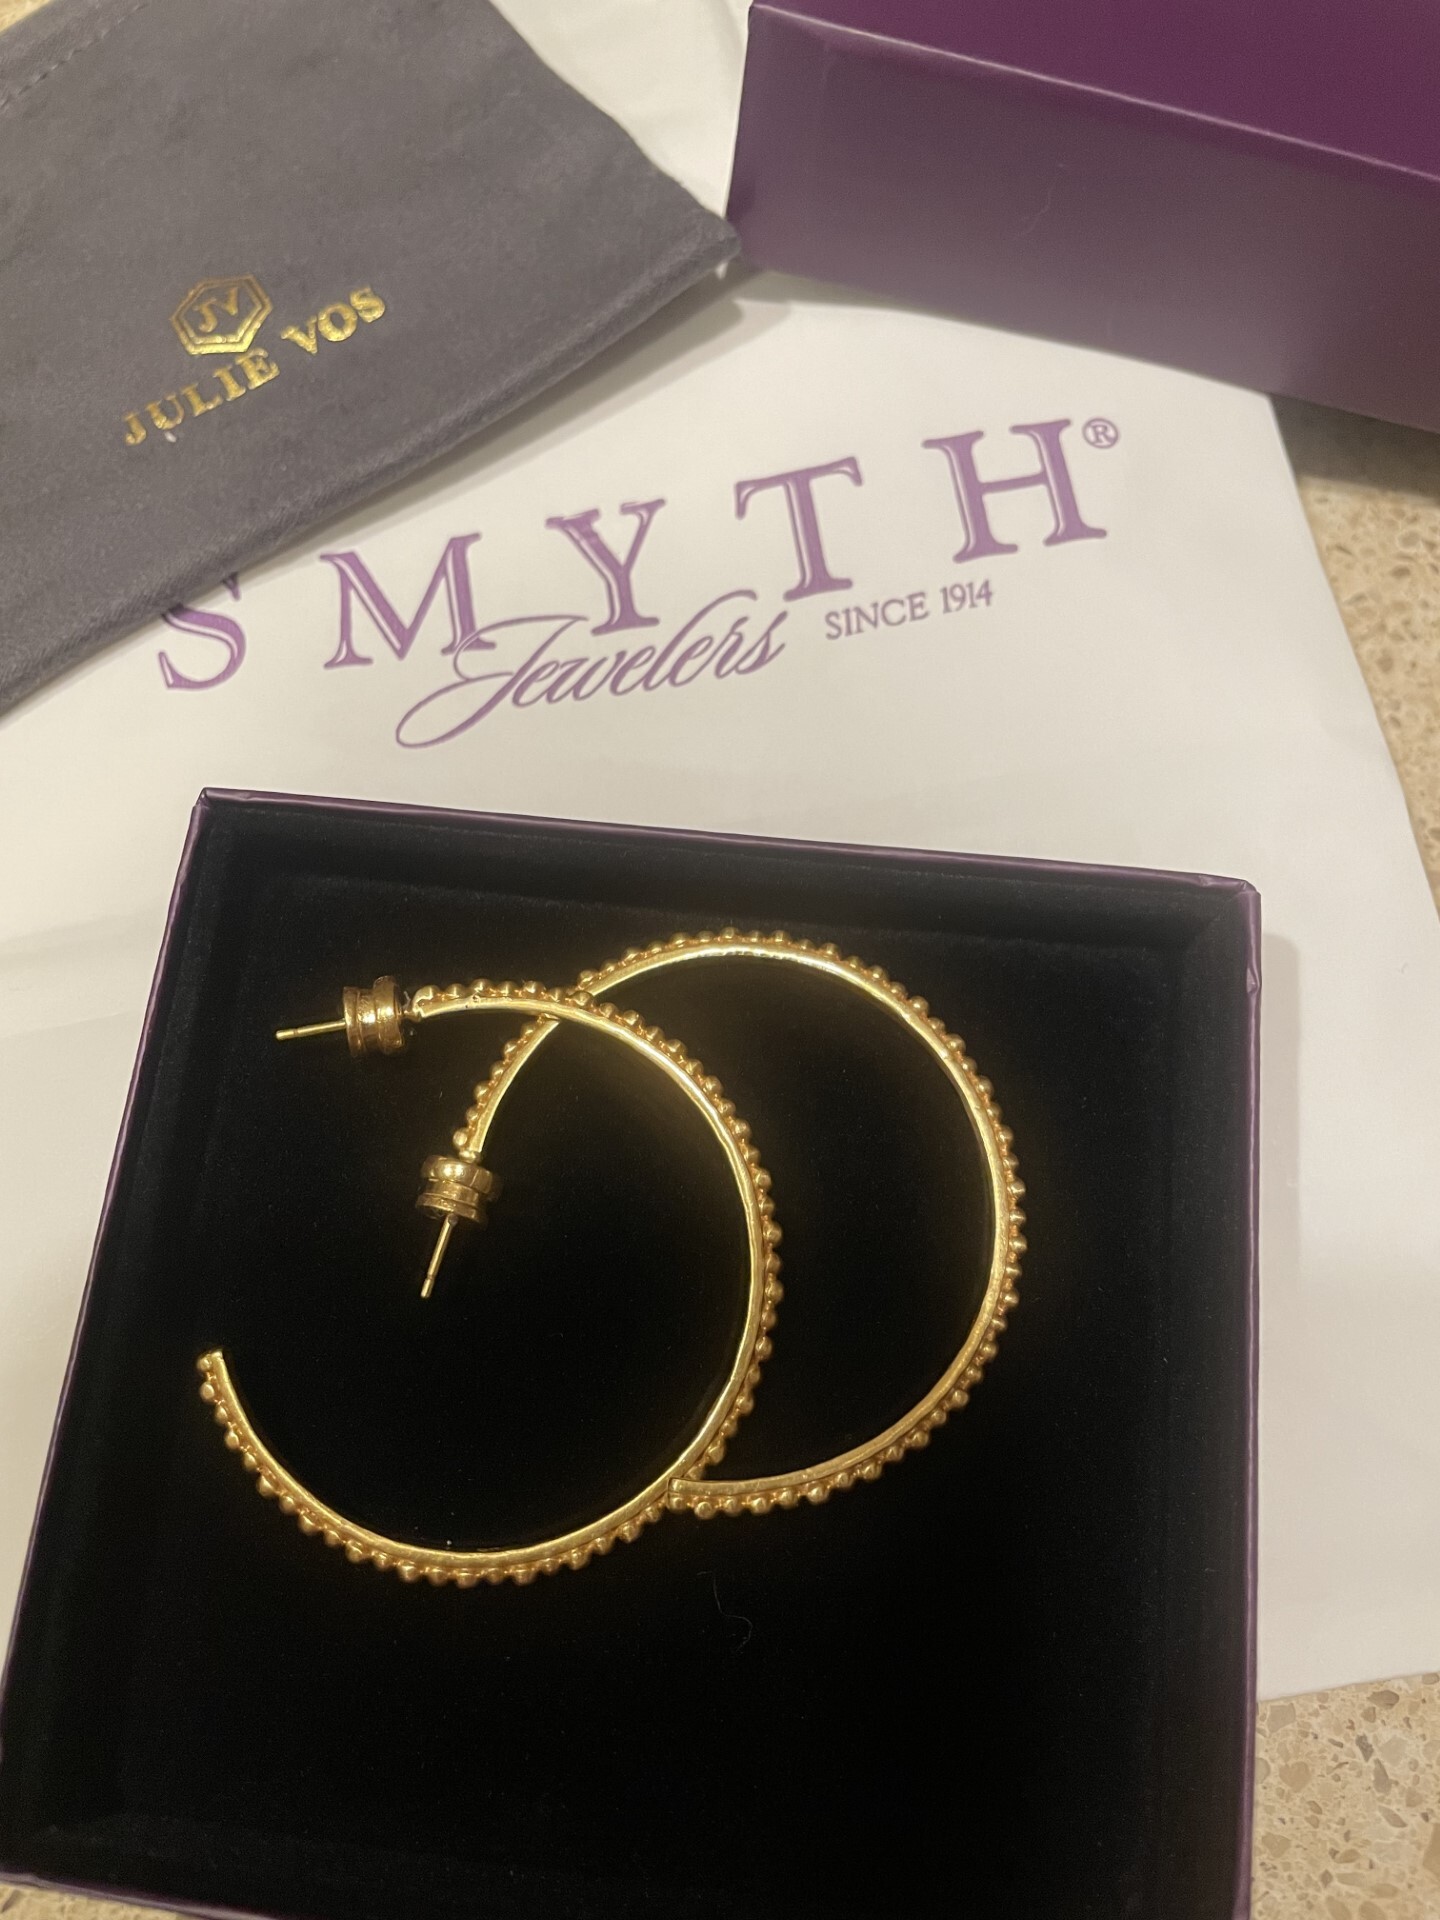 ITEM #104 - Julie Vos Colette 24K Gold Bead Hoop Earrings from Smyth Jewelers (Value:$75)